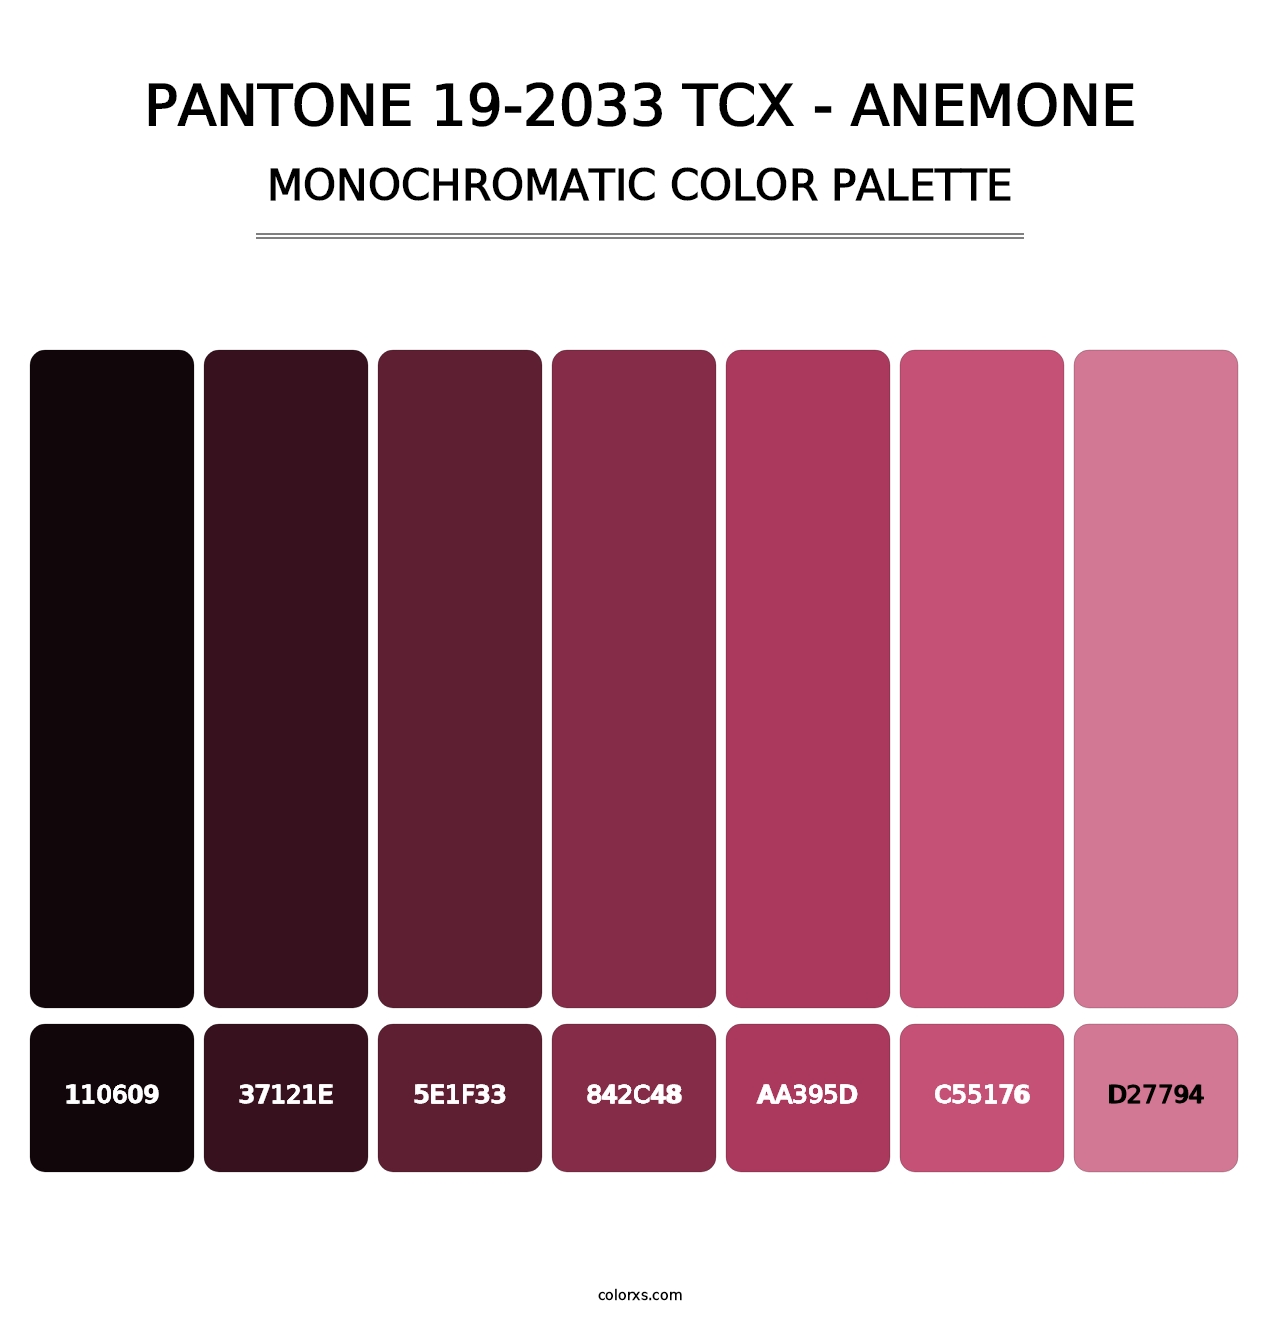 PANTONE 19-2033 TCX - Anemone - Monochromatic Color Palette